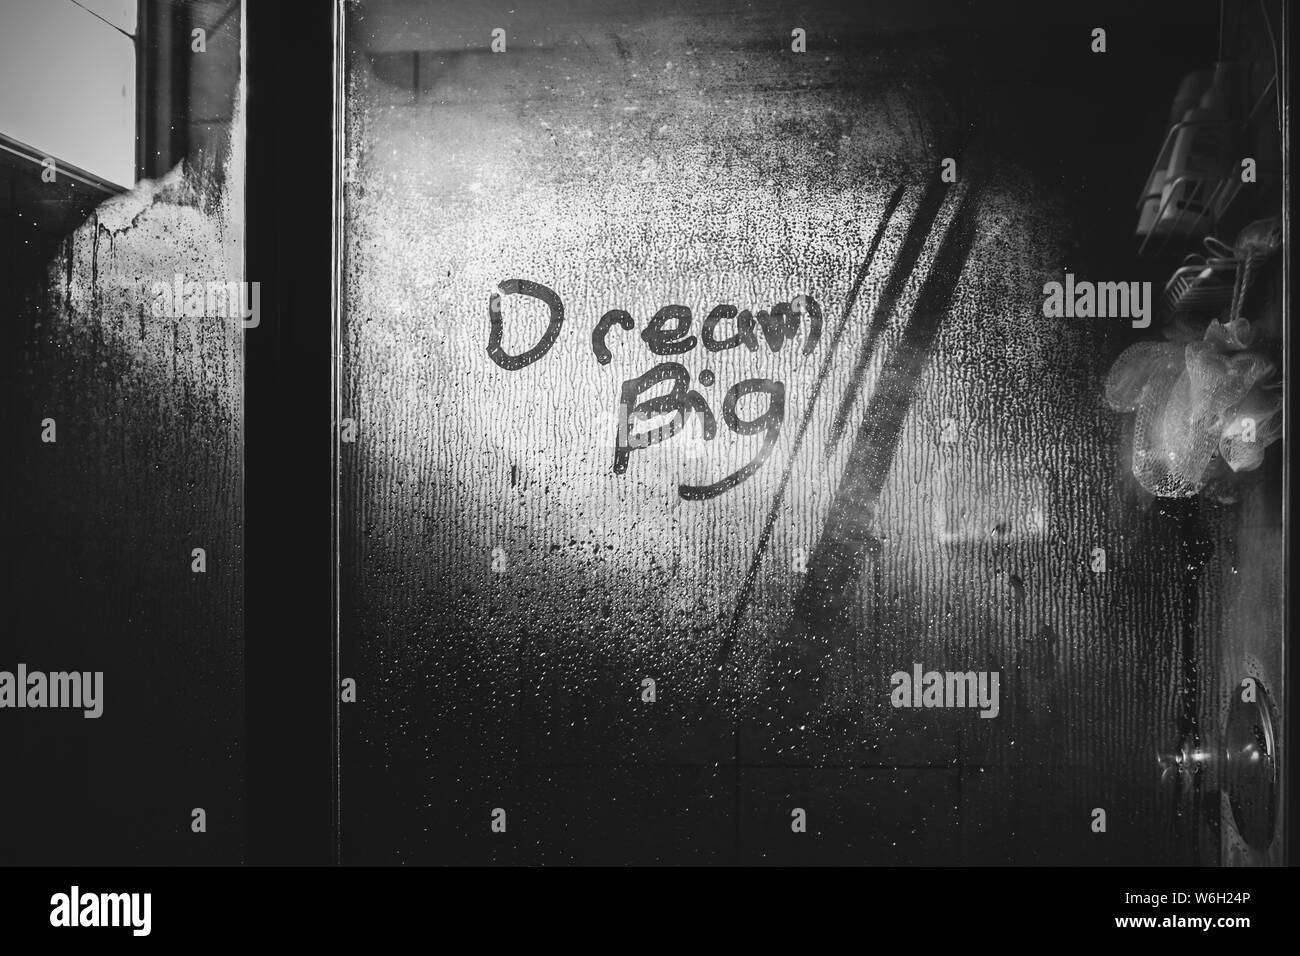 dream big shower writing in steam Stock Photo